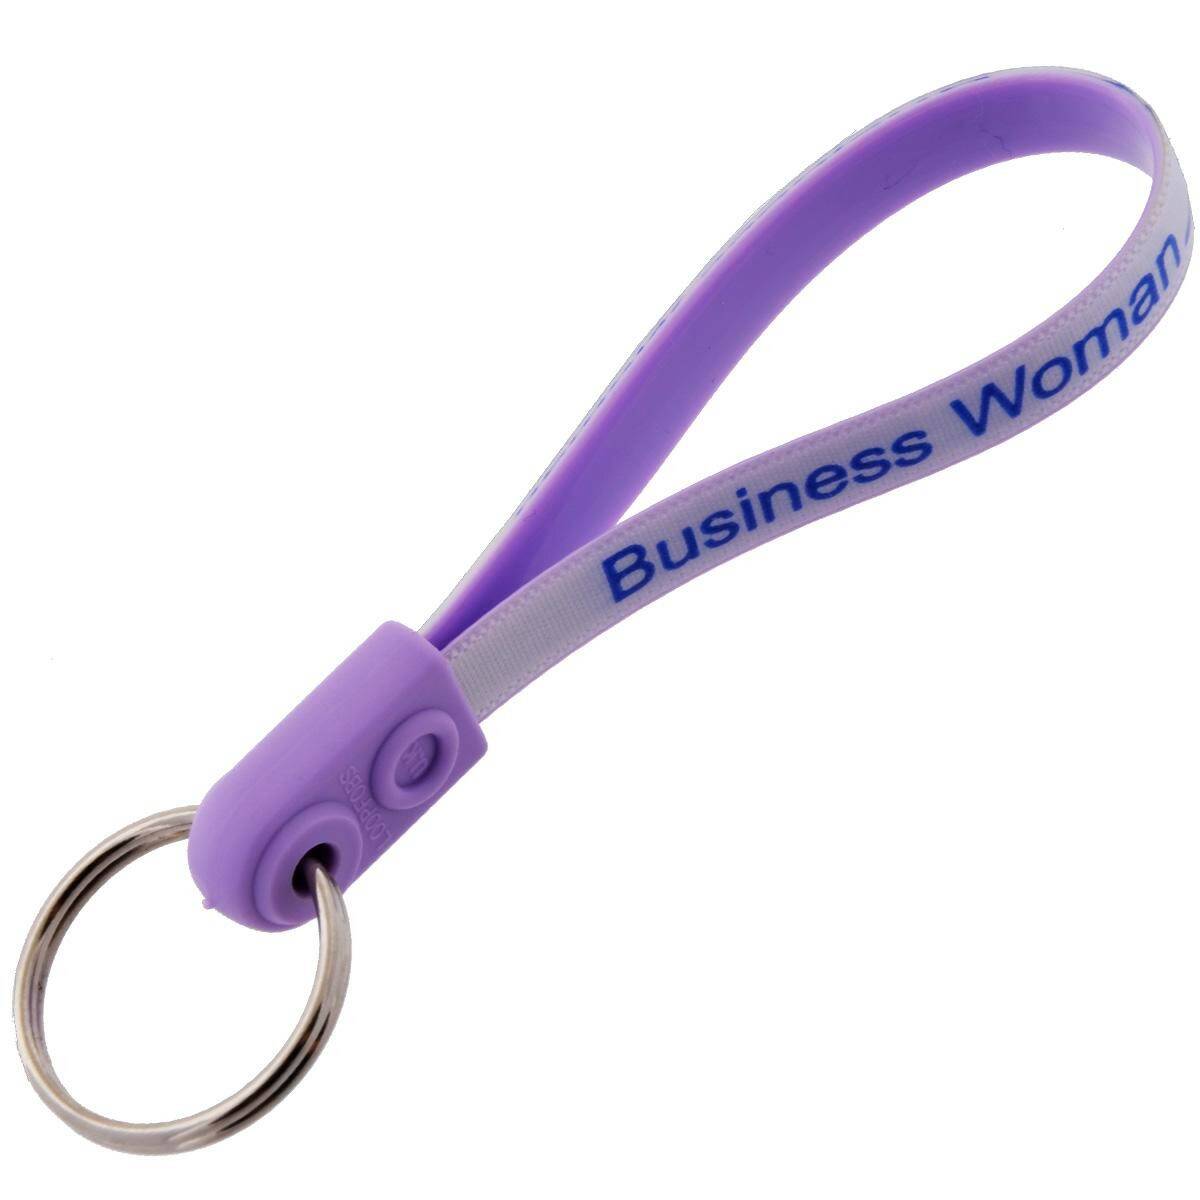 Belt keyring - BUSINESS WOMAN